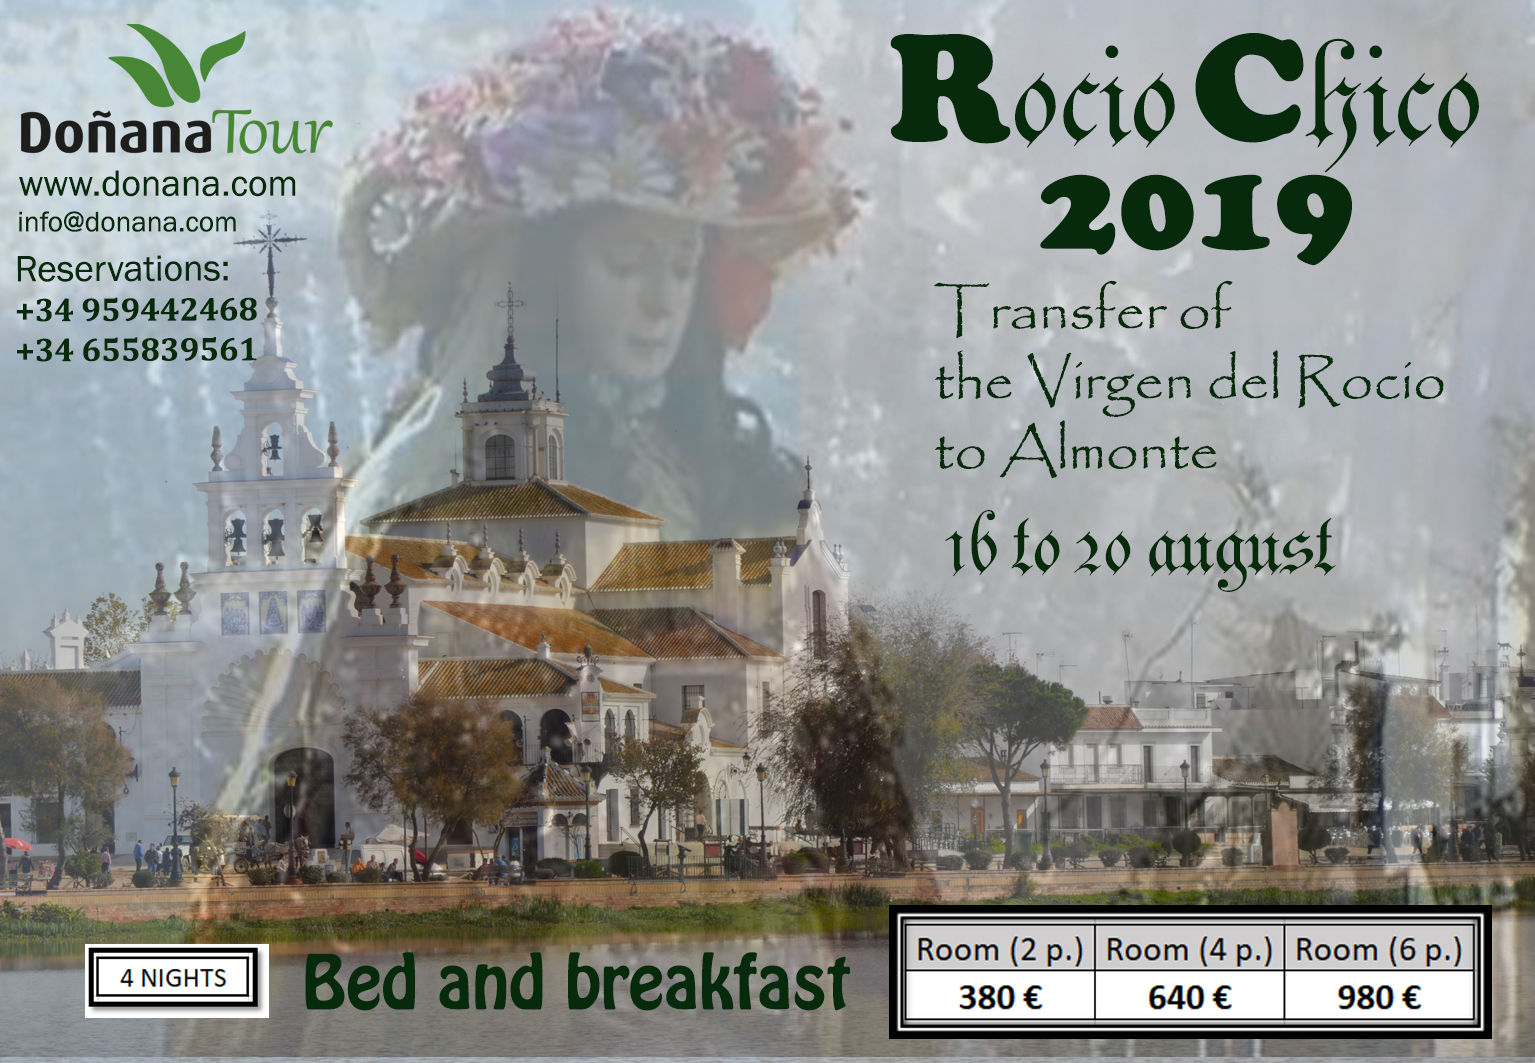 ROCÍO CHICO 2019 TRANSFER OF THE VIRGIN OF THE ROCÍO